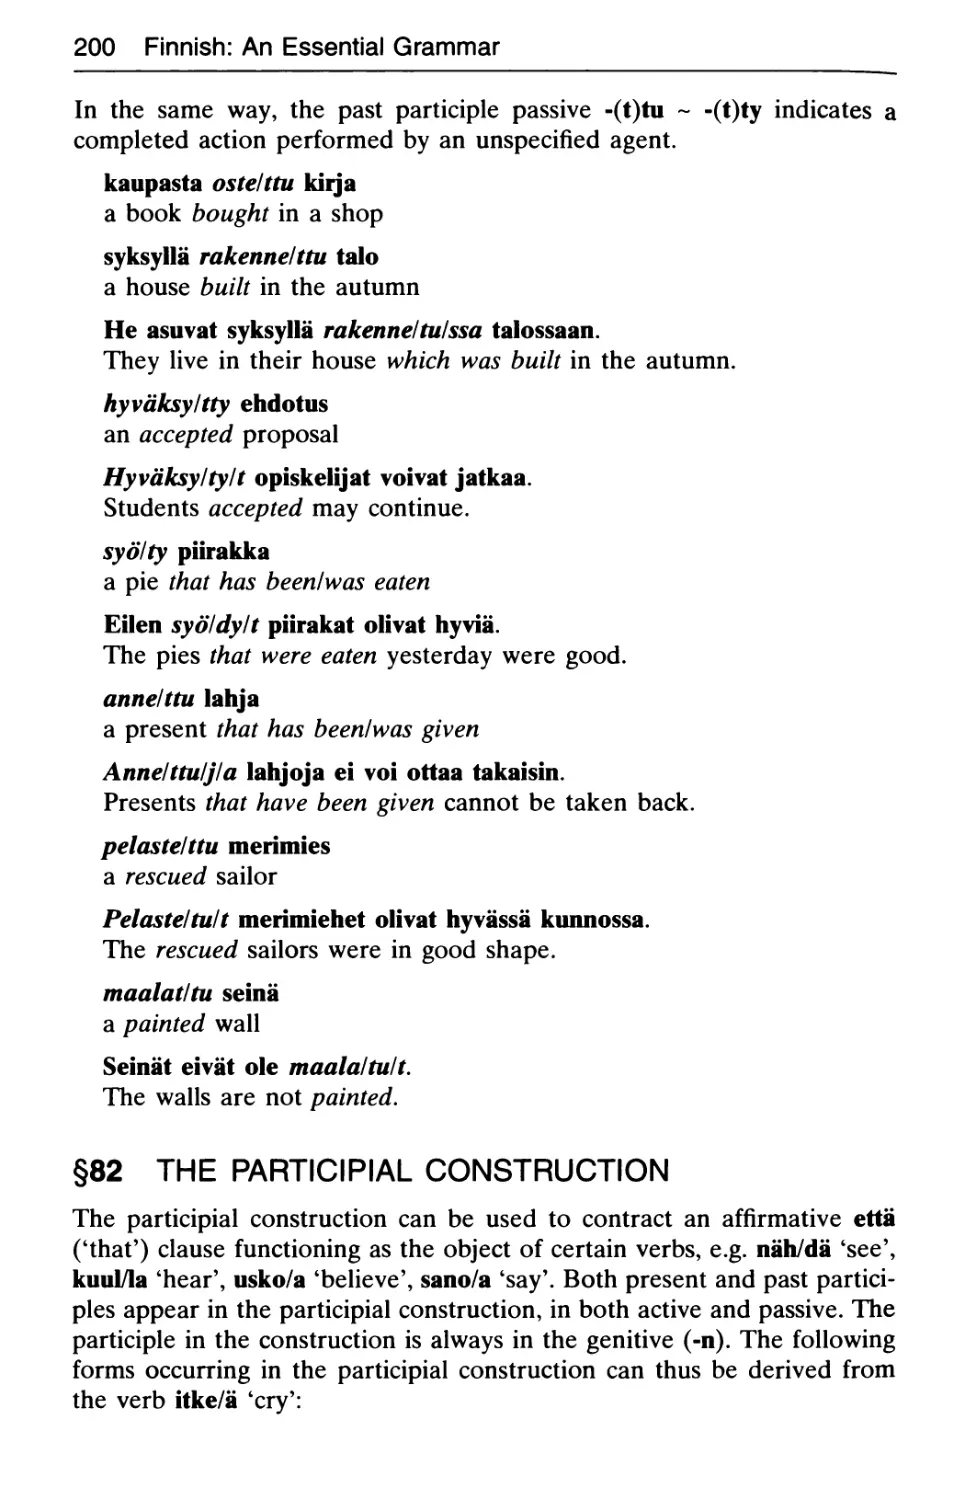 §82 The participial construction